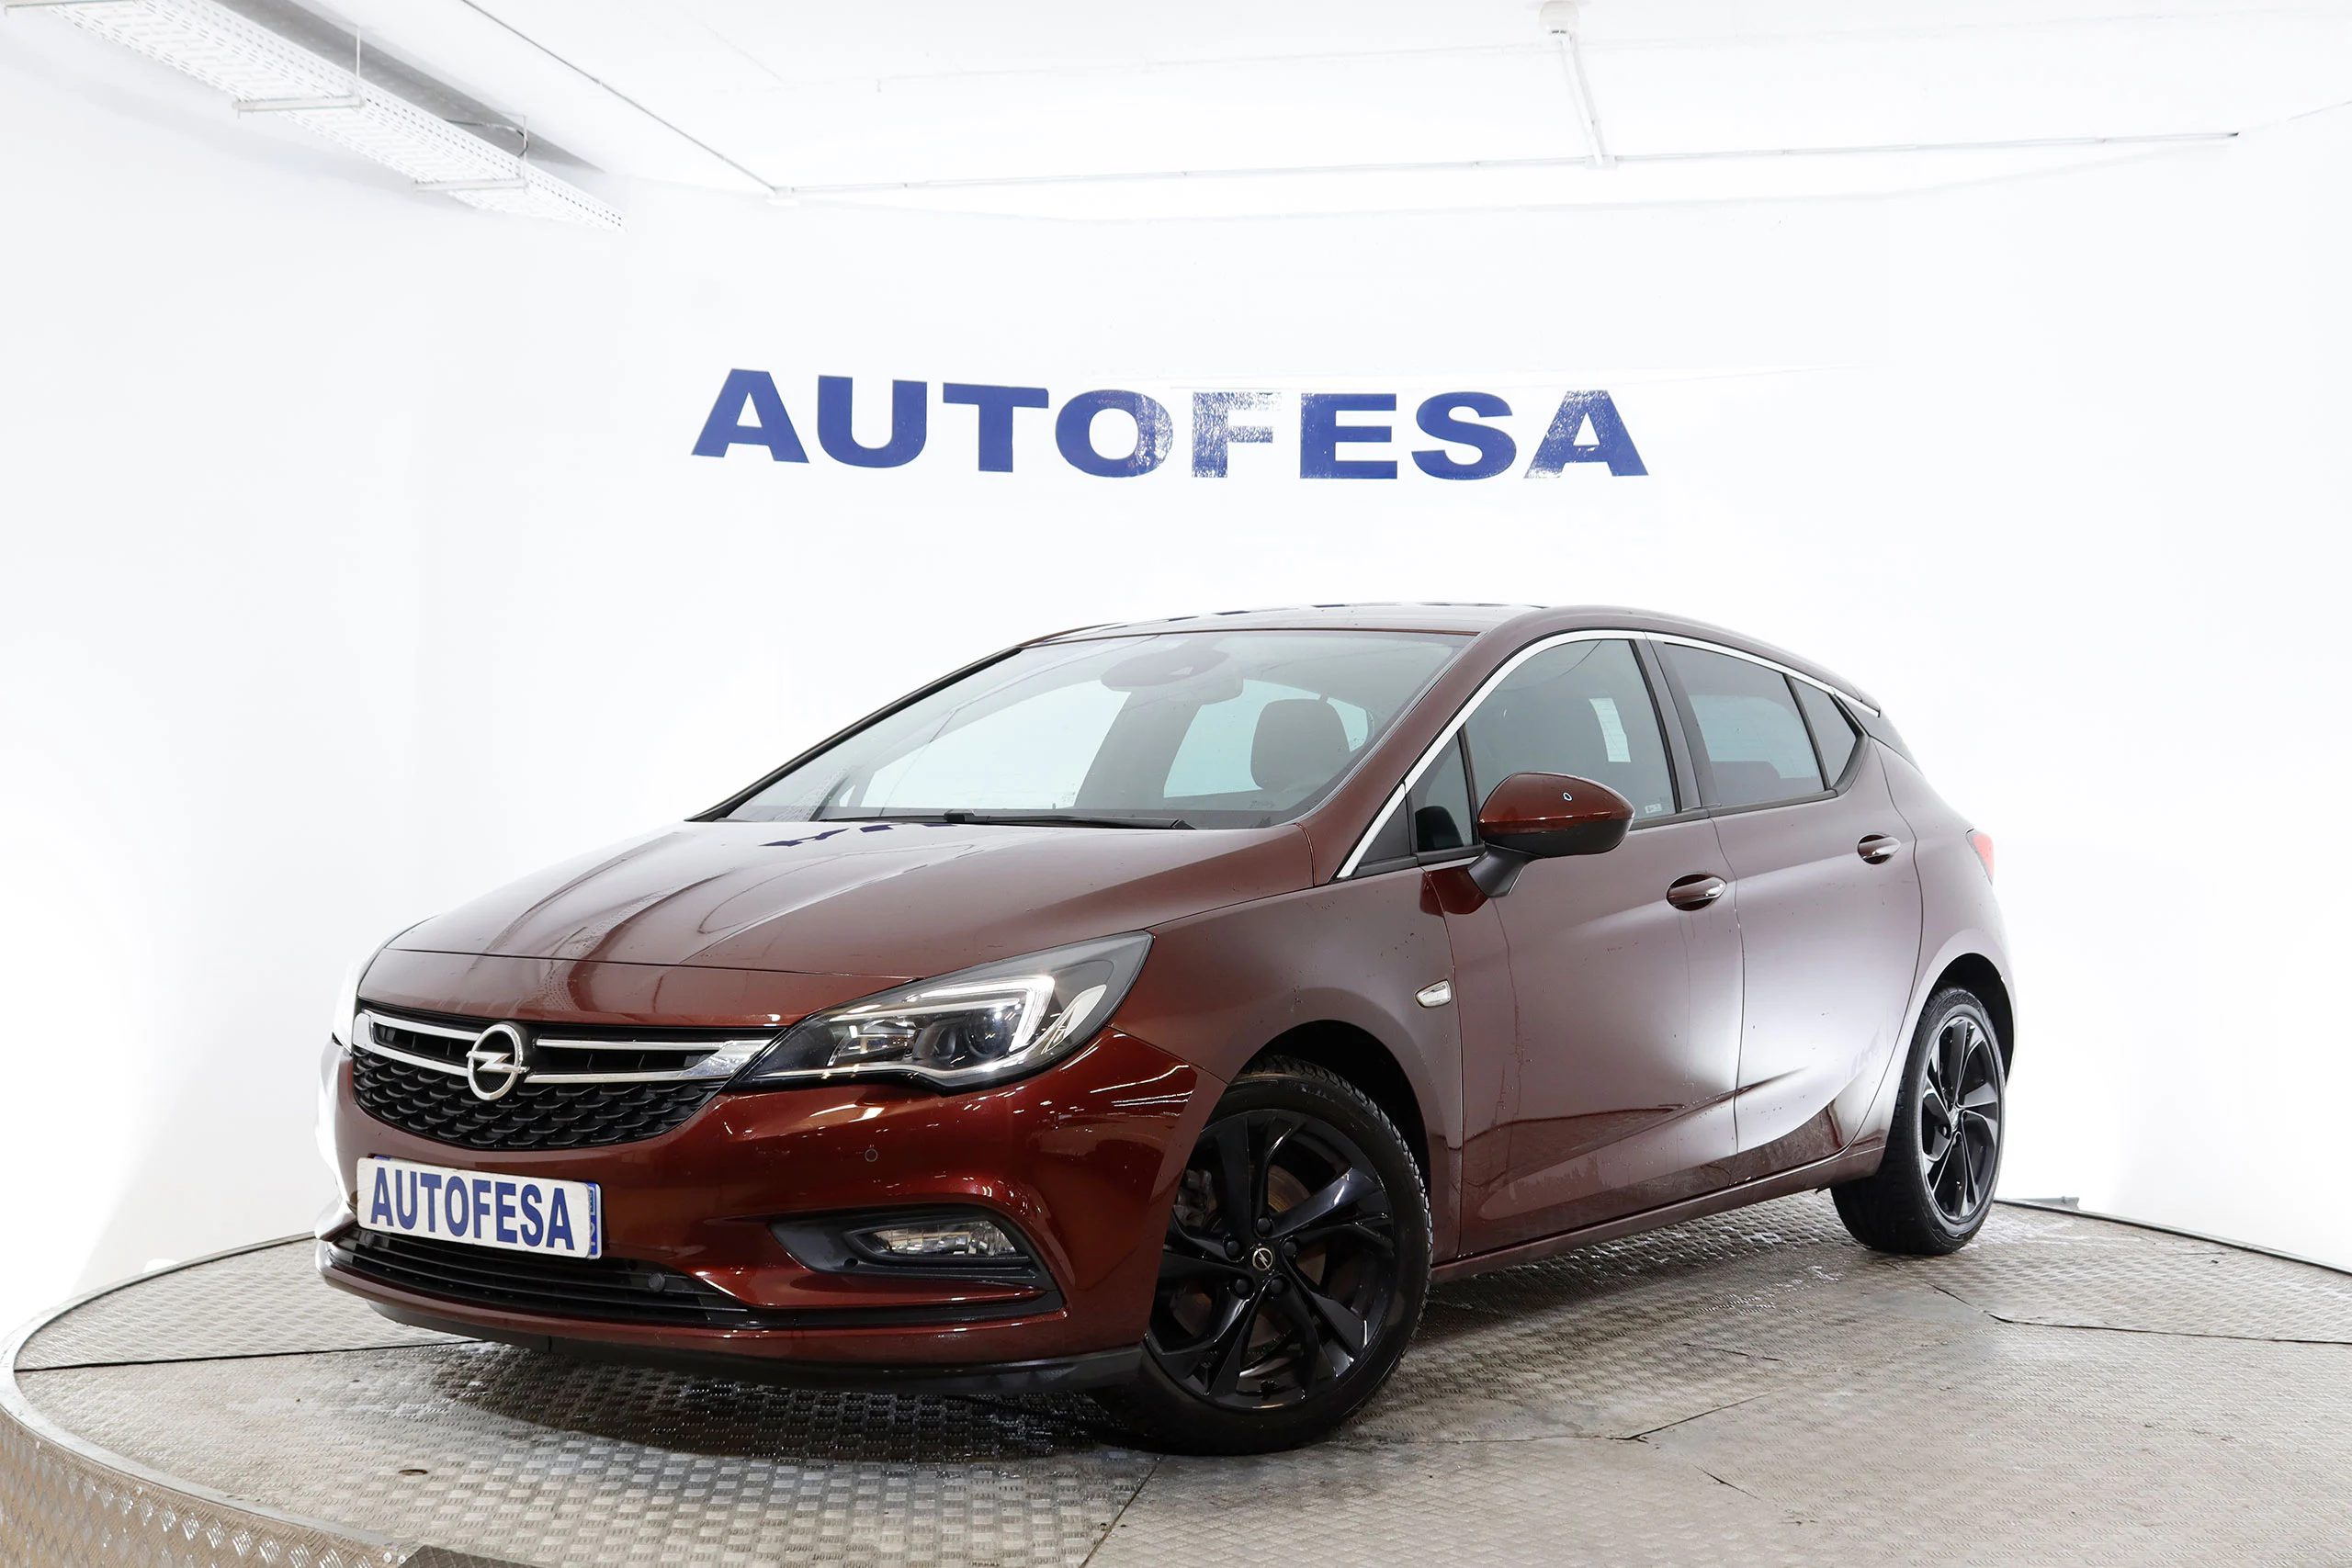 Opel Astra 1.6 CDTI Dynamic 136cv 5P S/S # CUERO - Foto 1